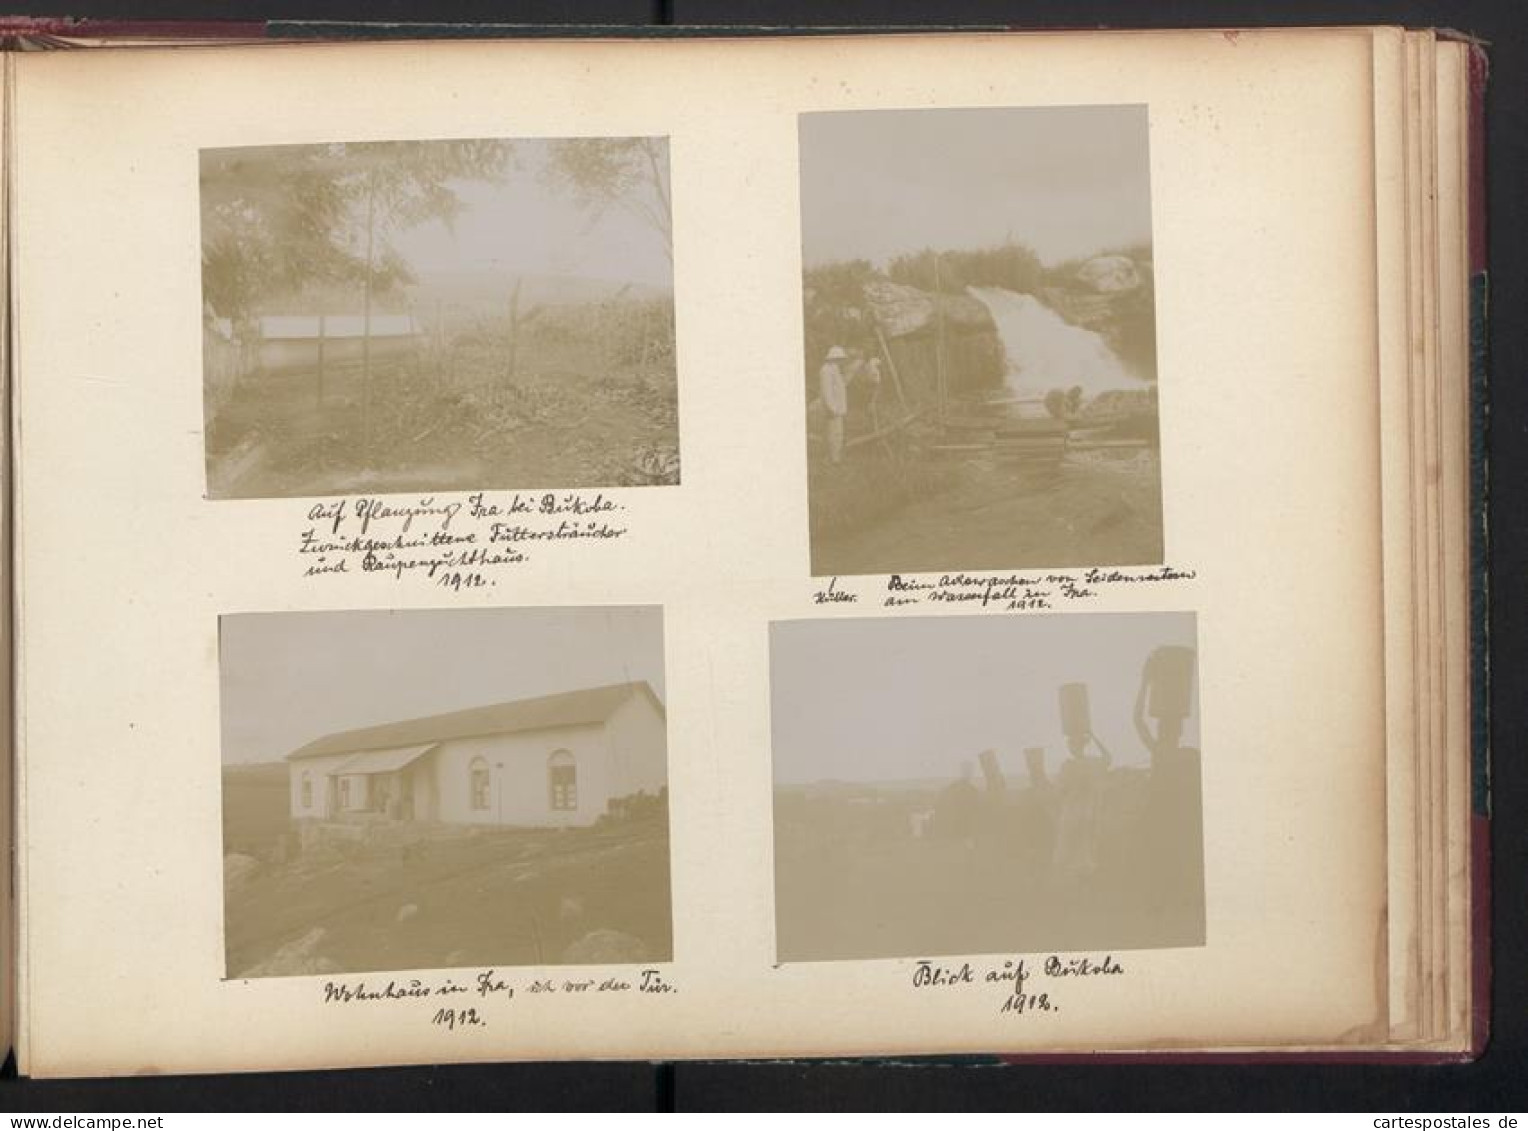 Album photos mit 80 Photos,  vue de Kissauke, DOA, Caraconica Baumwolle Anbau, Lokomobil, Plantage, 1909 